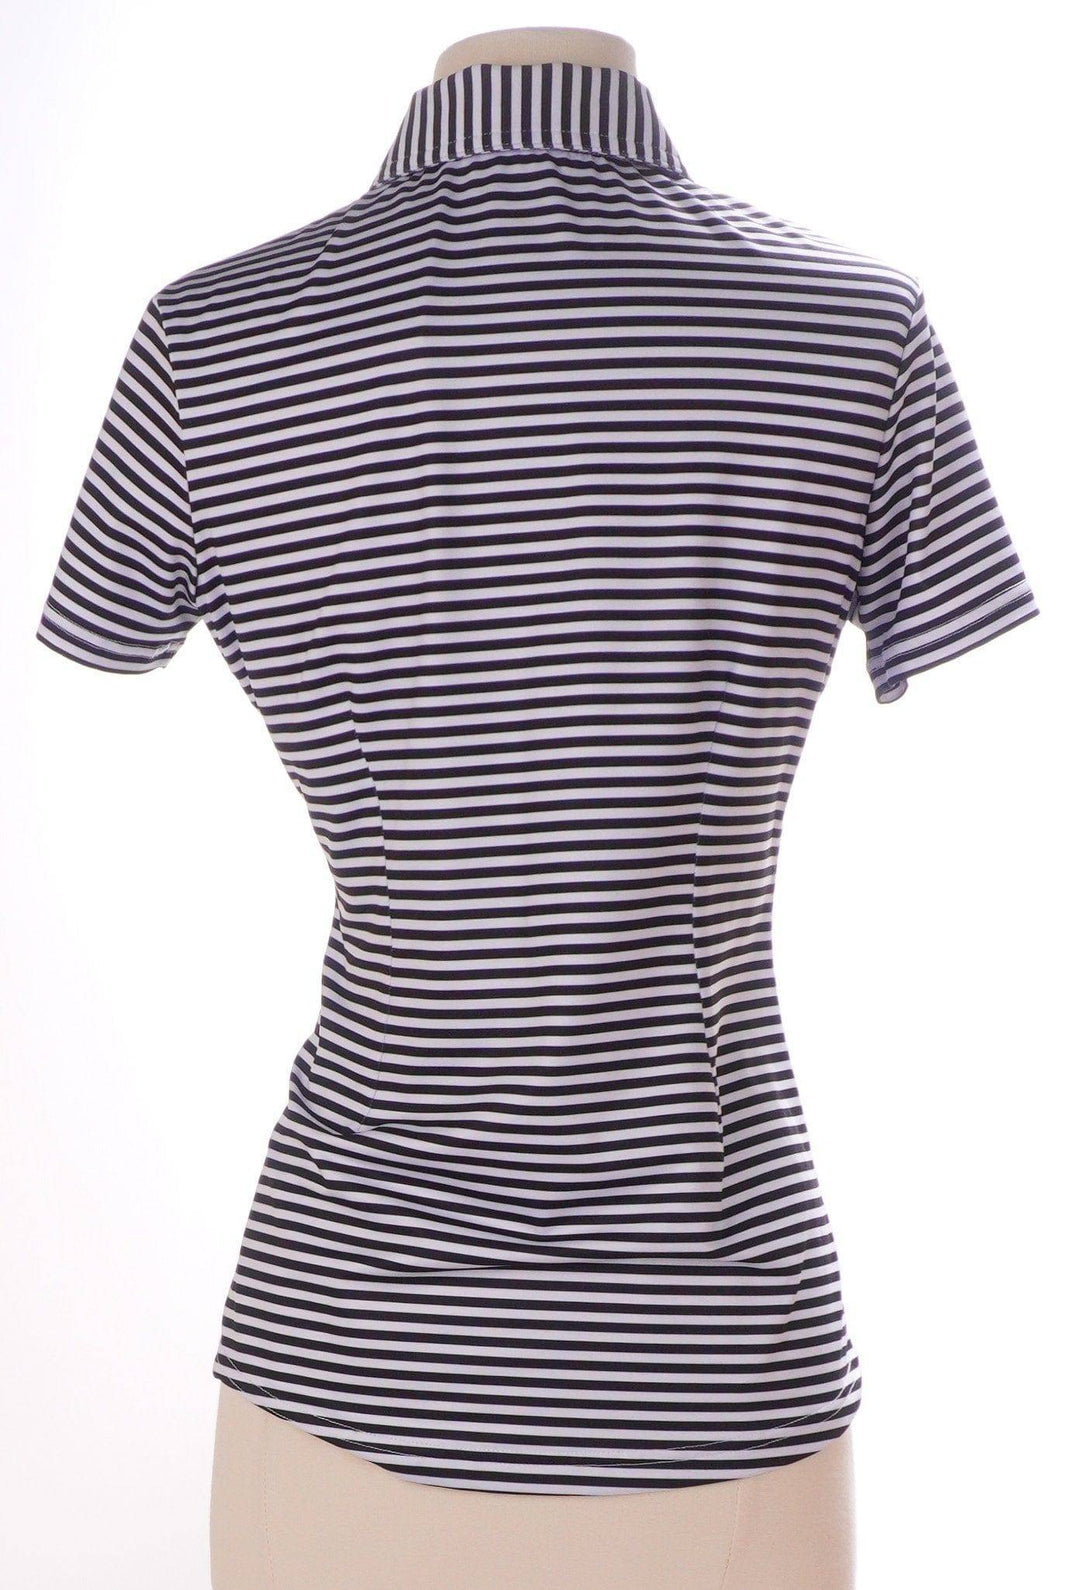 Jofit Small / Black / Consigned Annika Short Sleeve Golf Shirt  - White-Black Stripe - Size Small